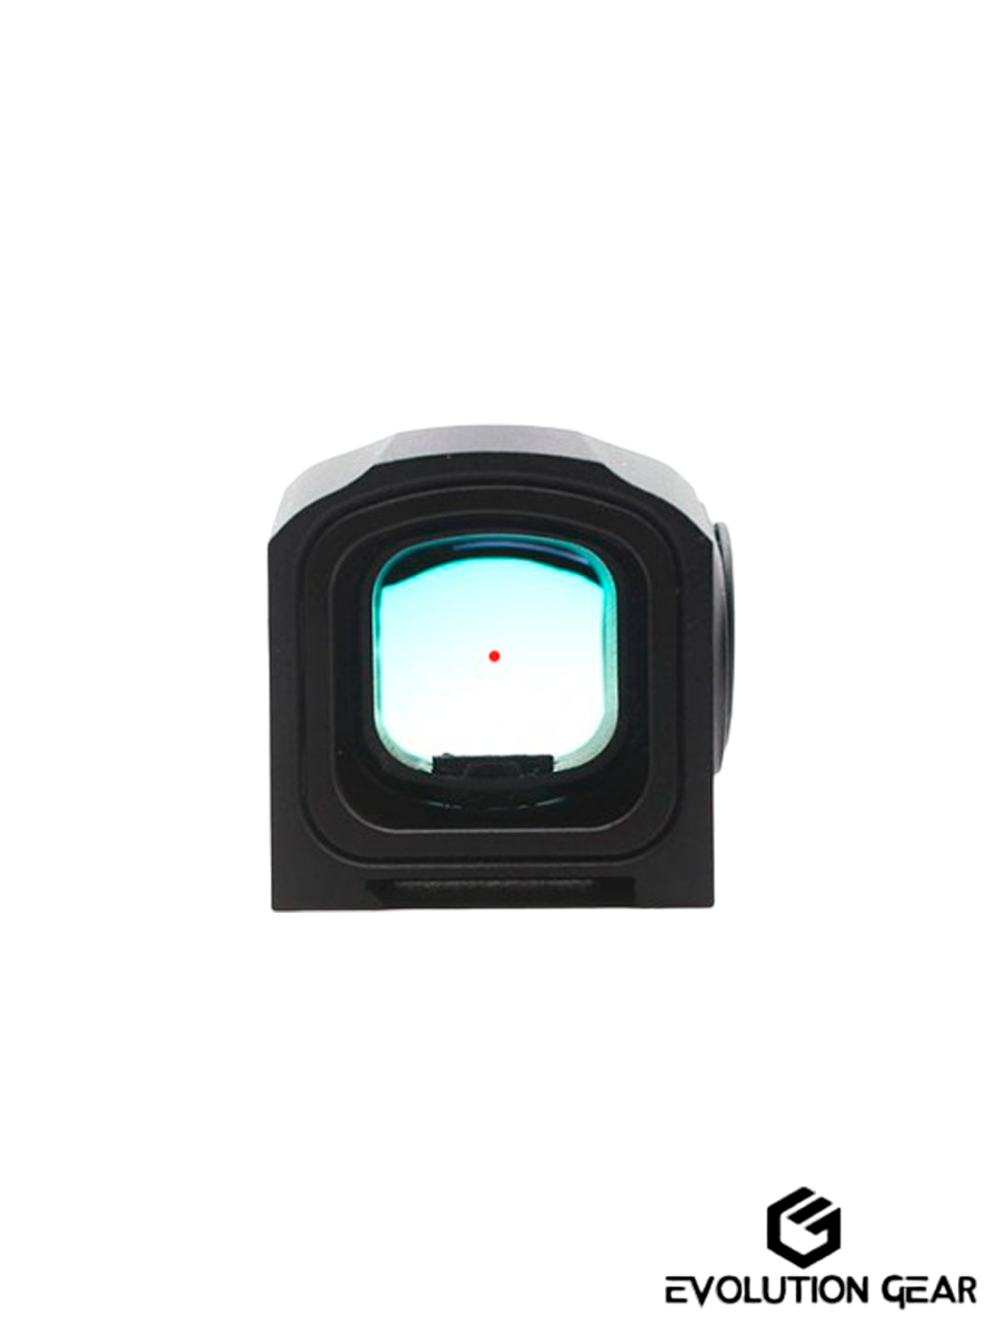 Микроколлиматор Evolution Gear P1 Style Red Dot Sight. Black